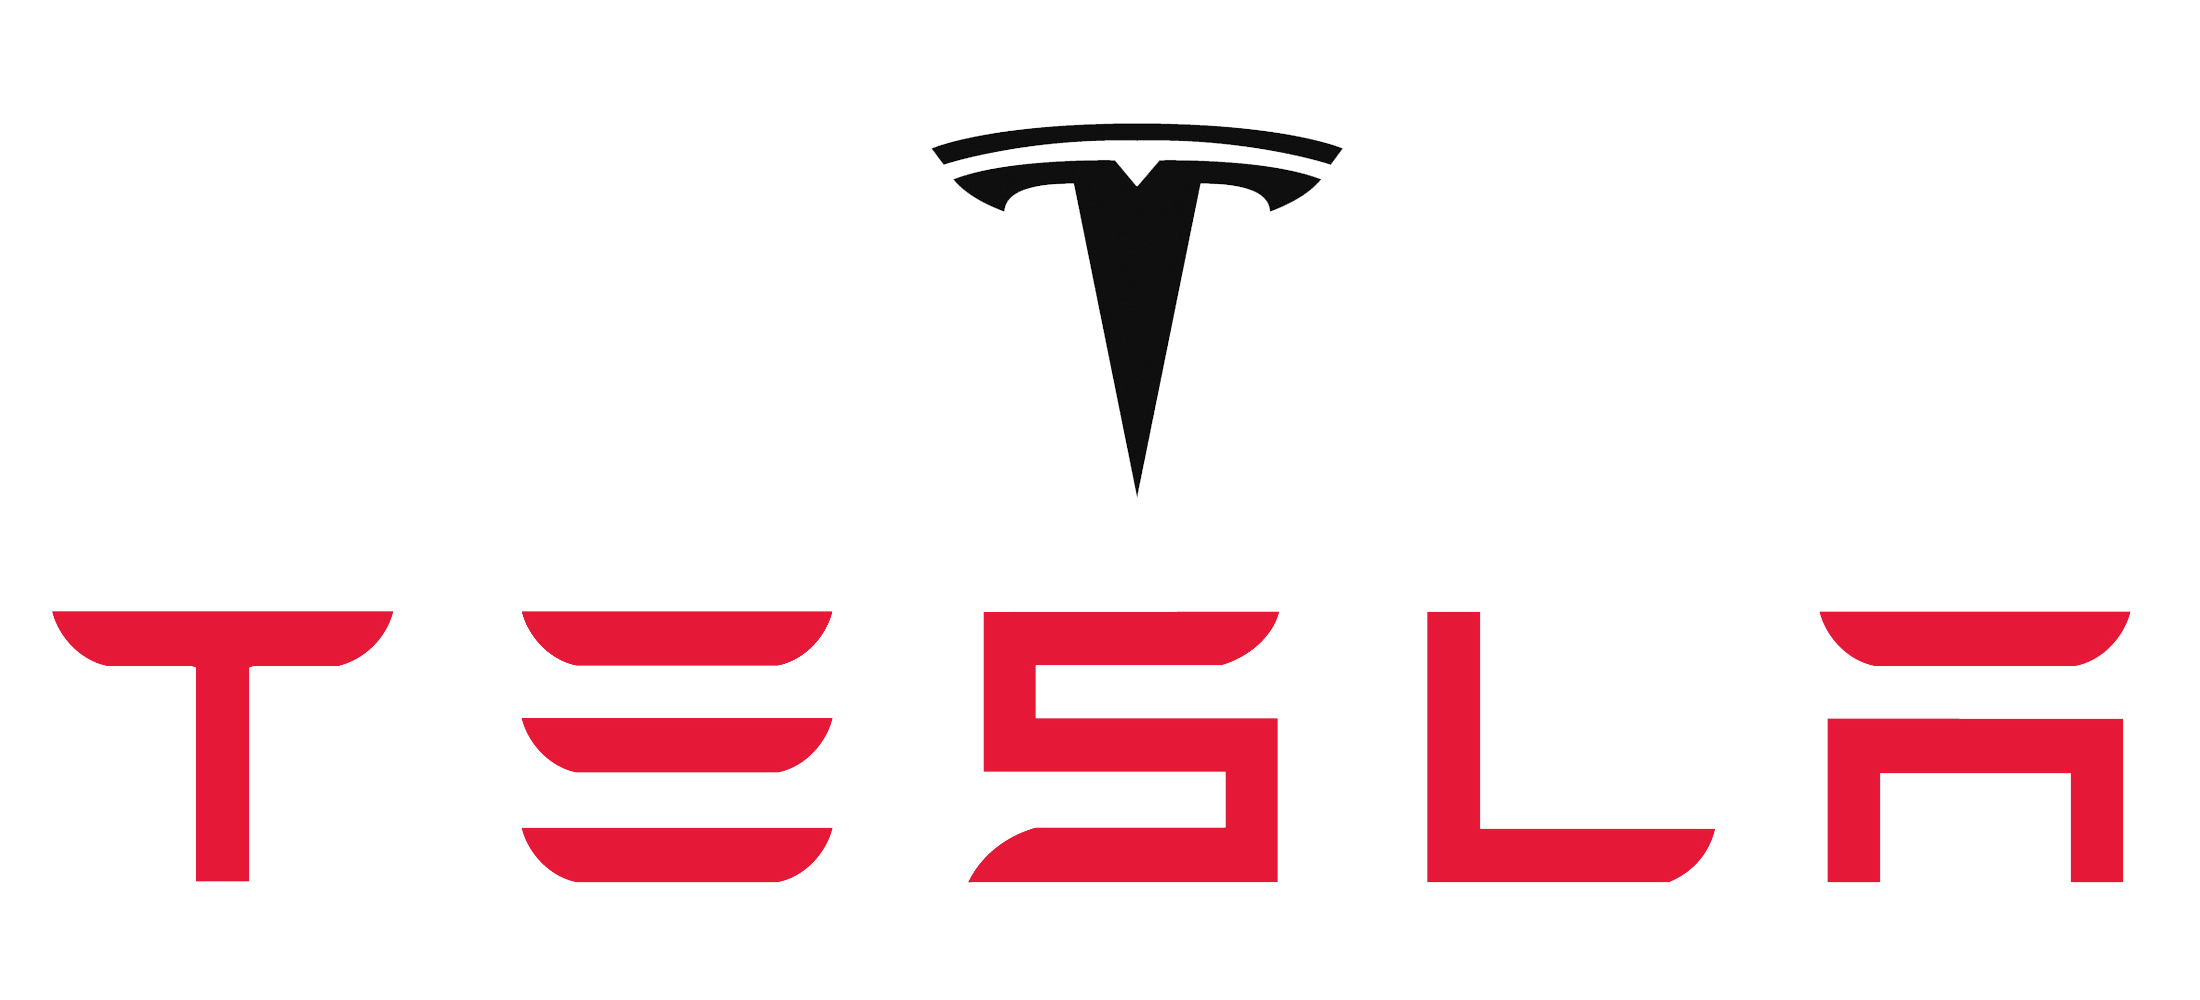 Tesla Car Motors Cars Brands Logo Model Clipart